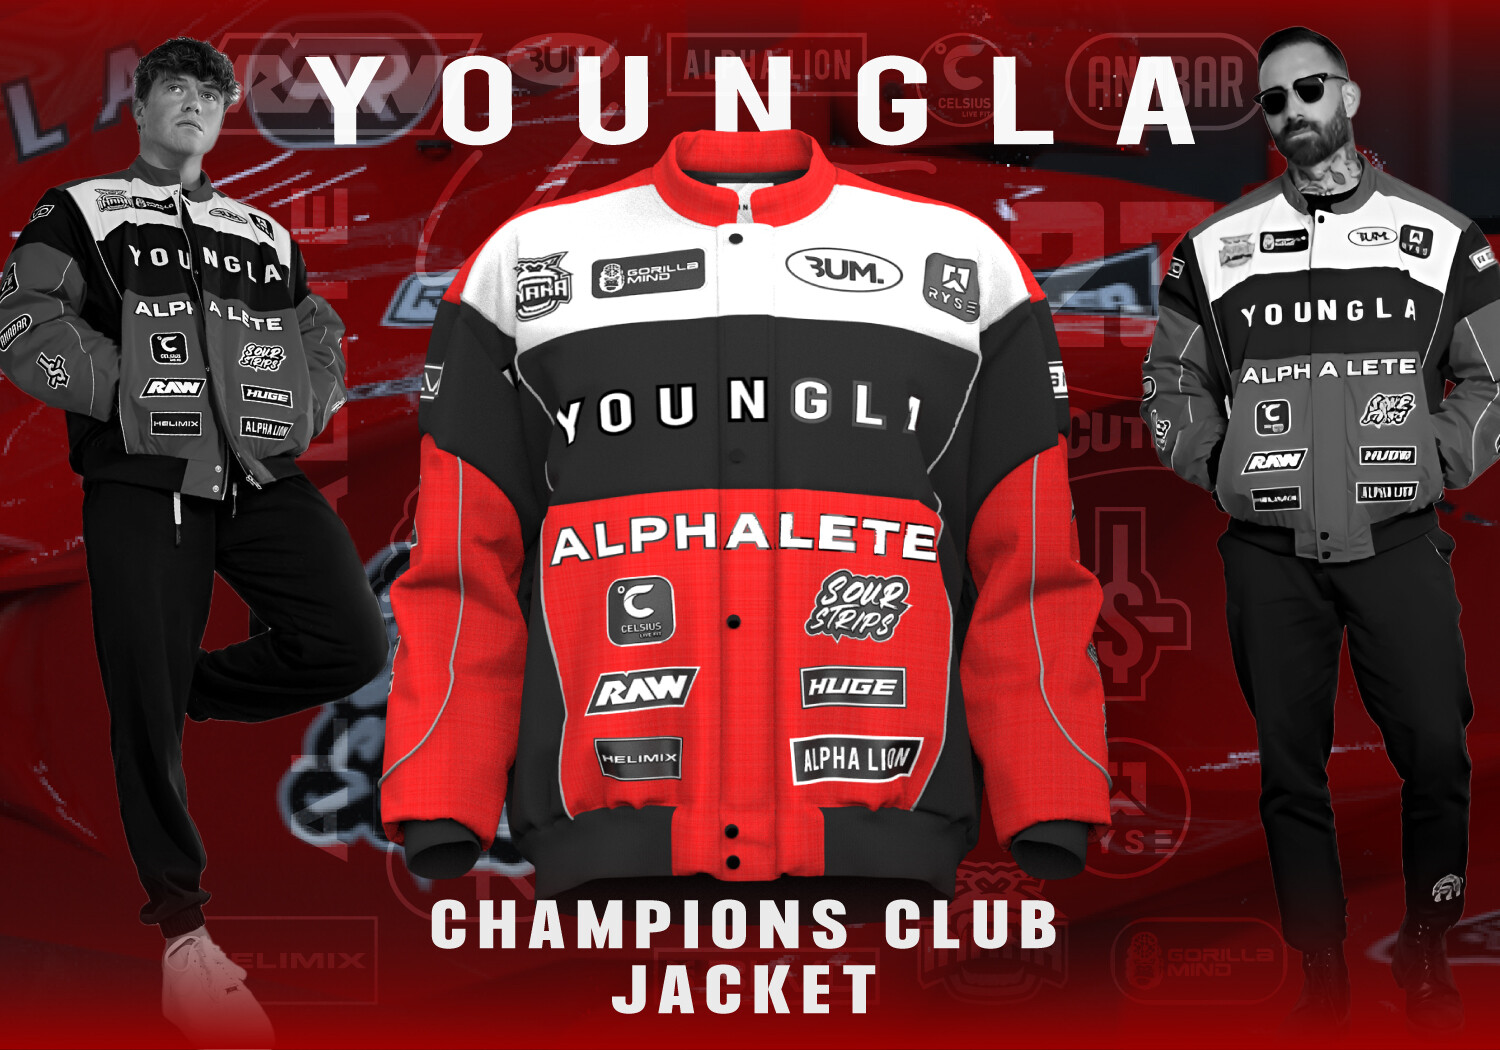 YOUNGLA champions club jacket unboxing